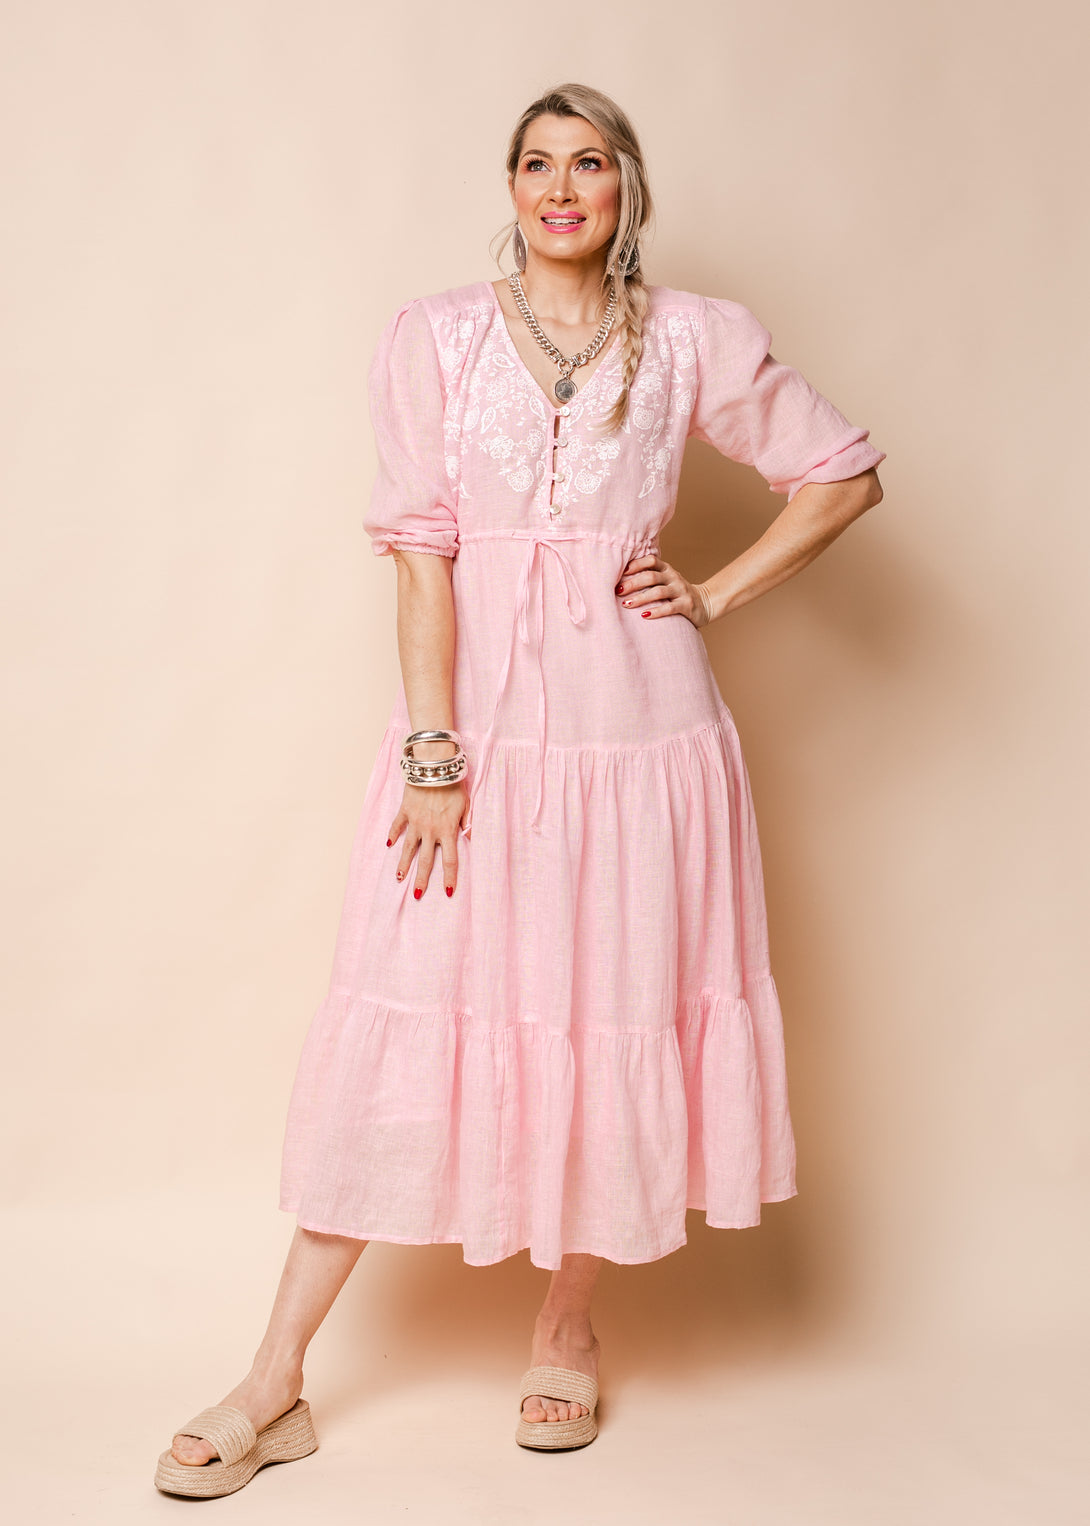 Danica Linen Dress in Blush - Imagine Fashion